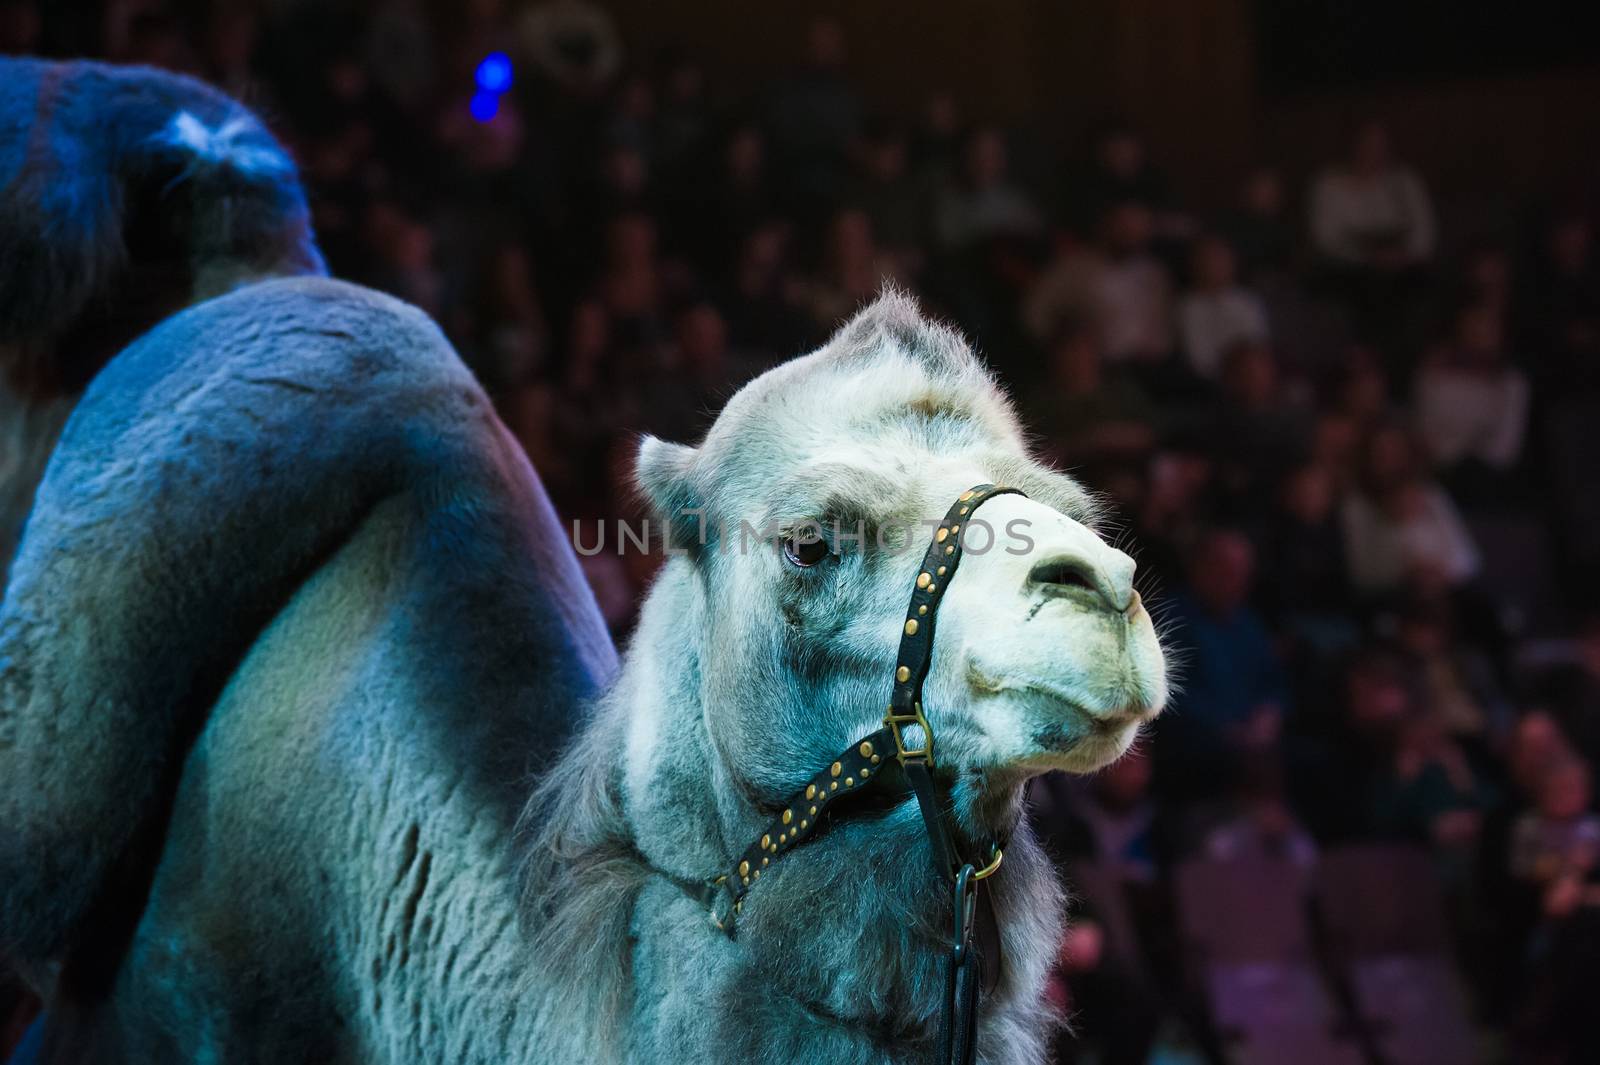 Circus camel performs in the circus by grigorenko